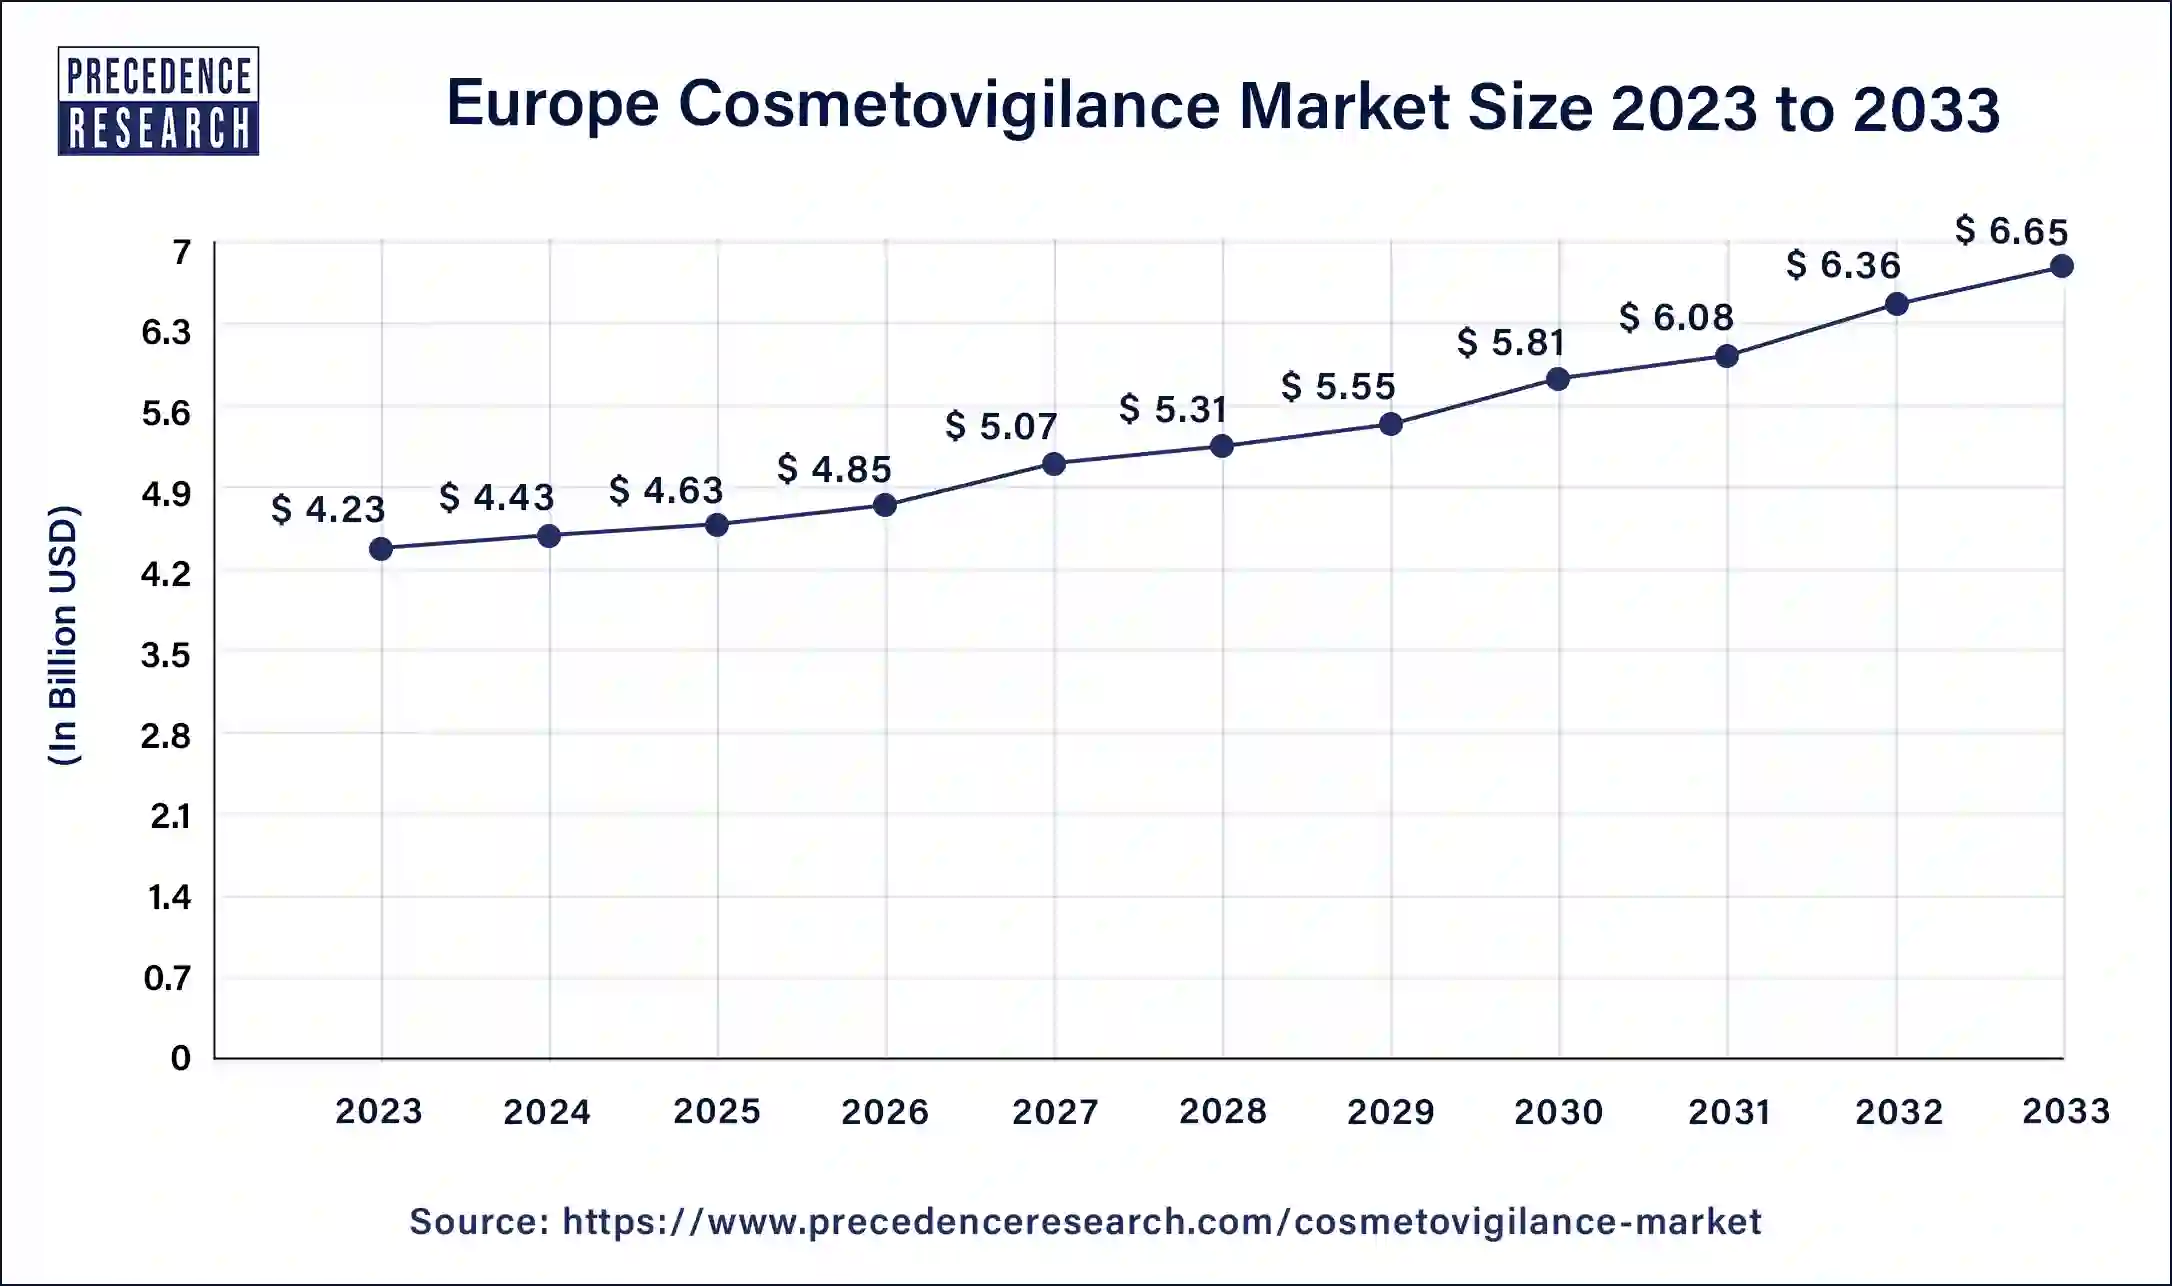 Europe Cosmetovigilance Market Size 2024 to 2033